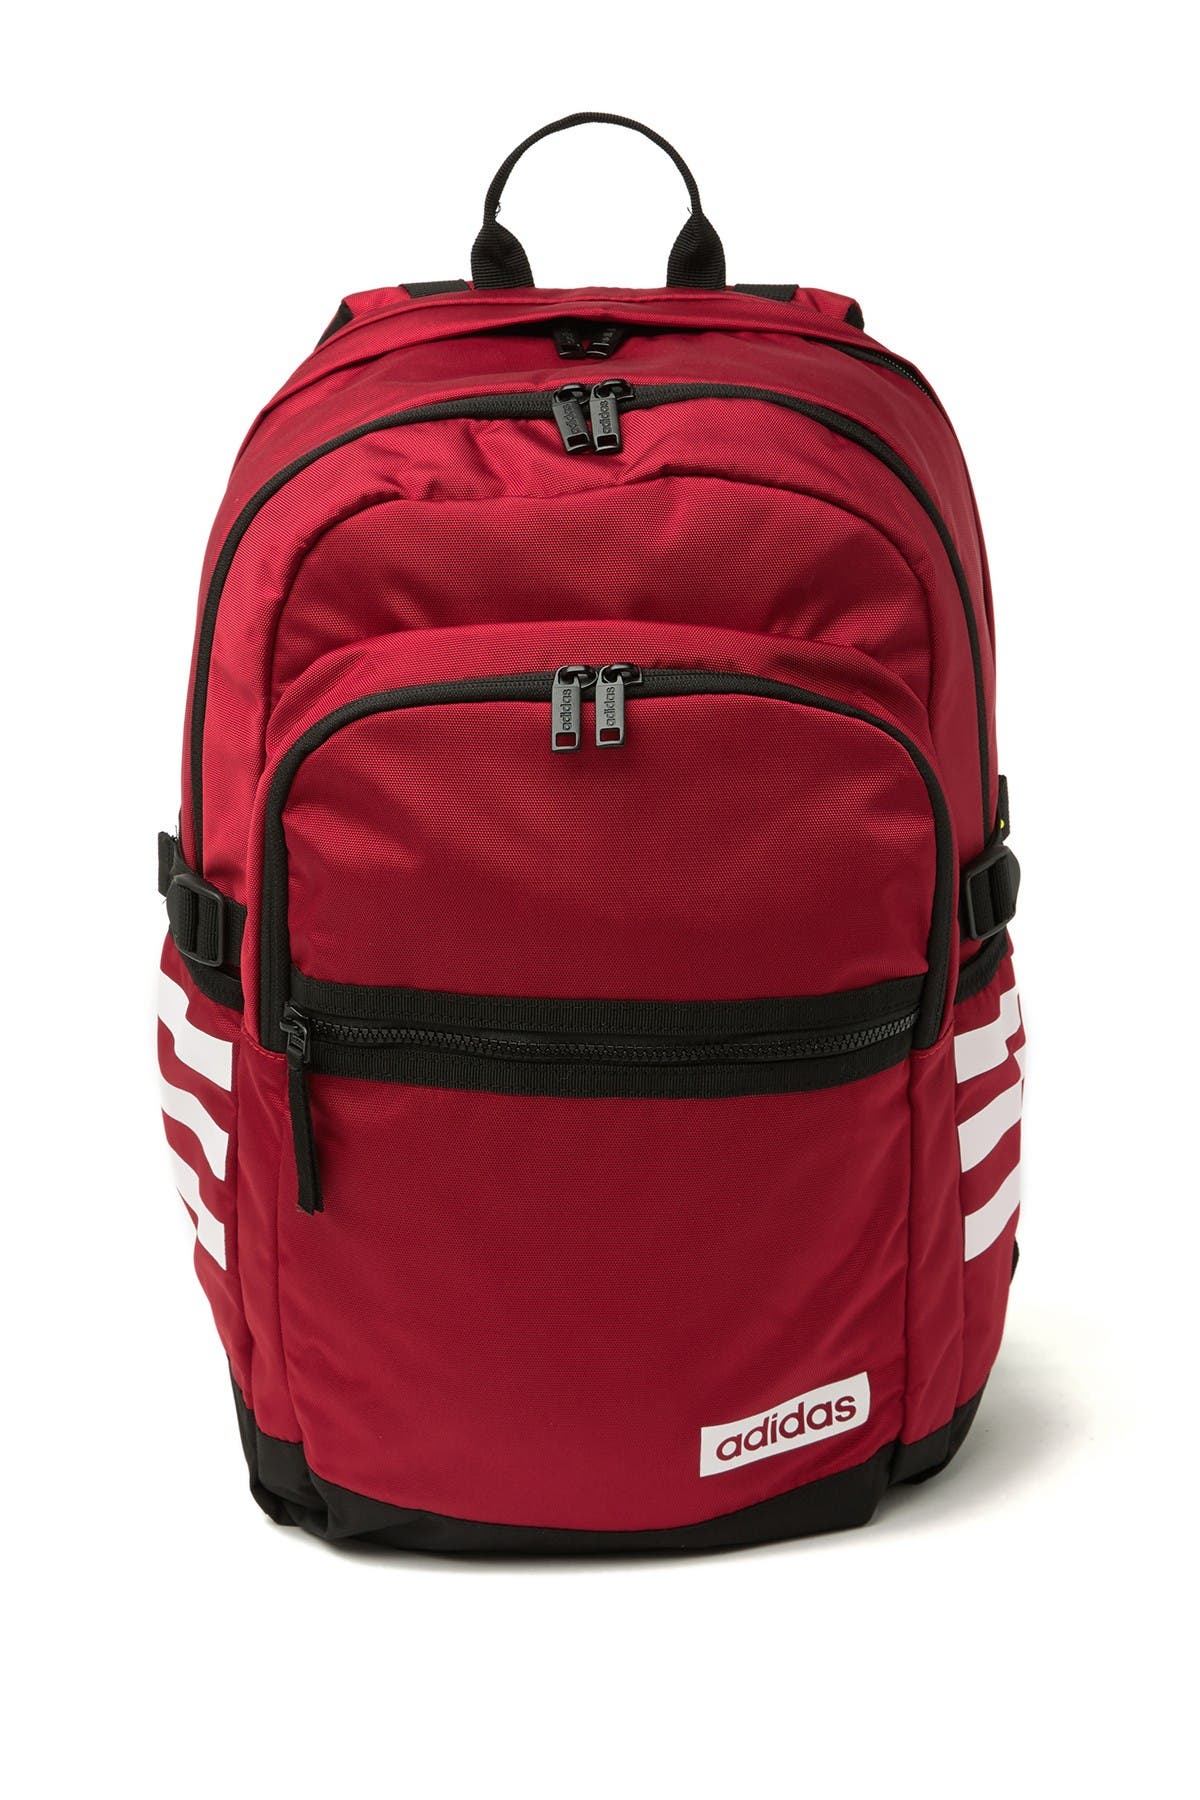 adidas core advantage ii backpack